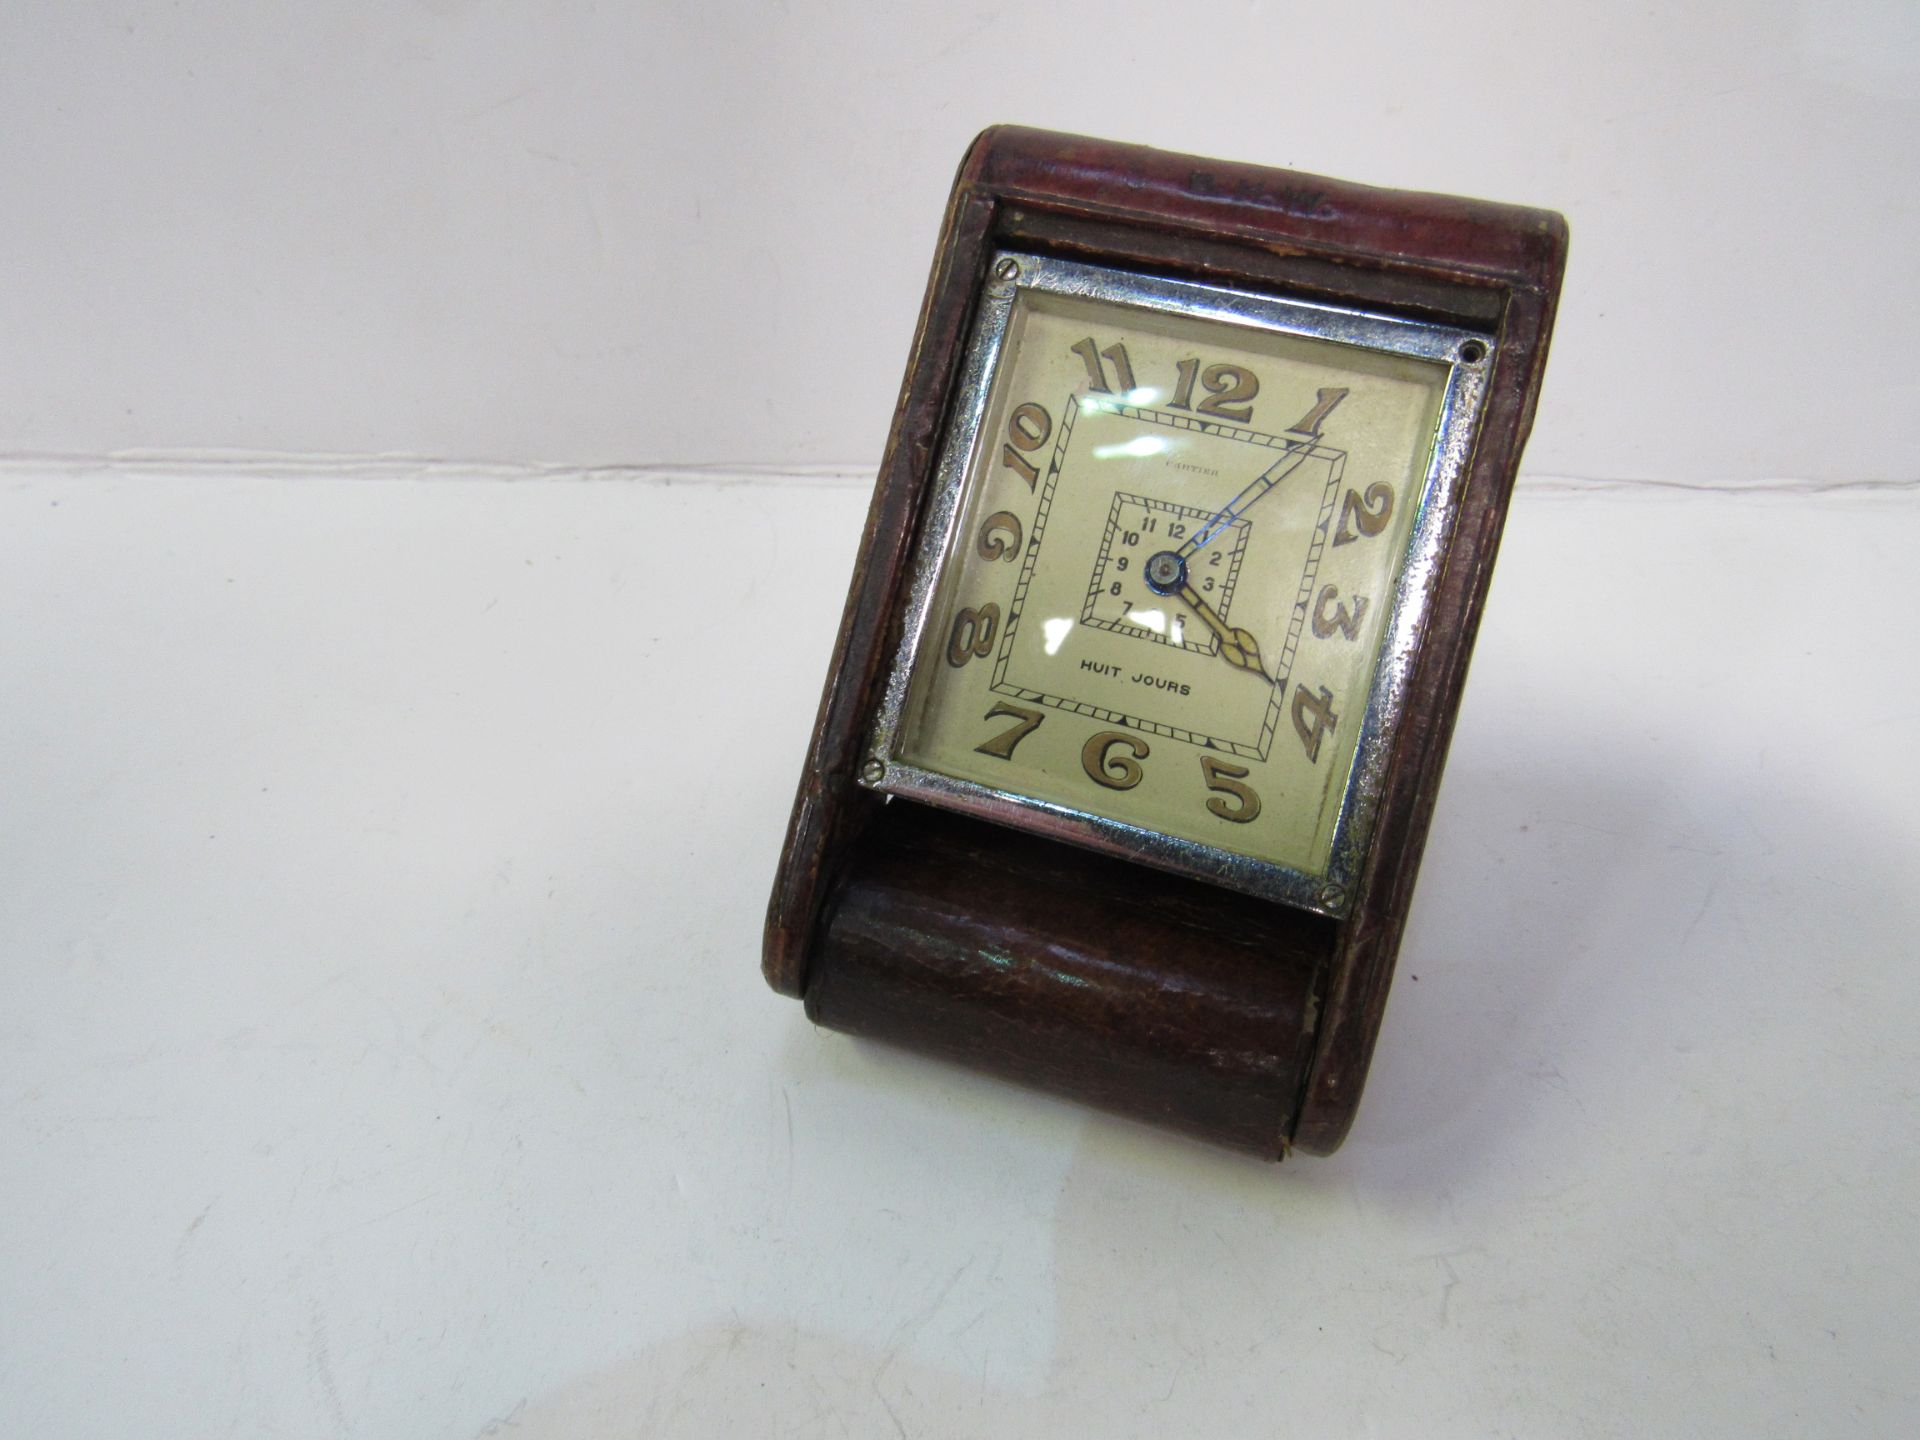 1930's Cartier ""Huit Jours"" travelling alarm clock in leather case. Estimate £100-150. - Image 2 of 3